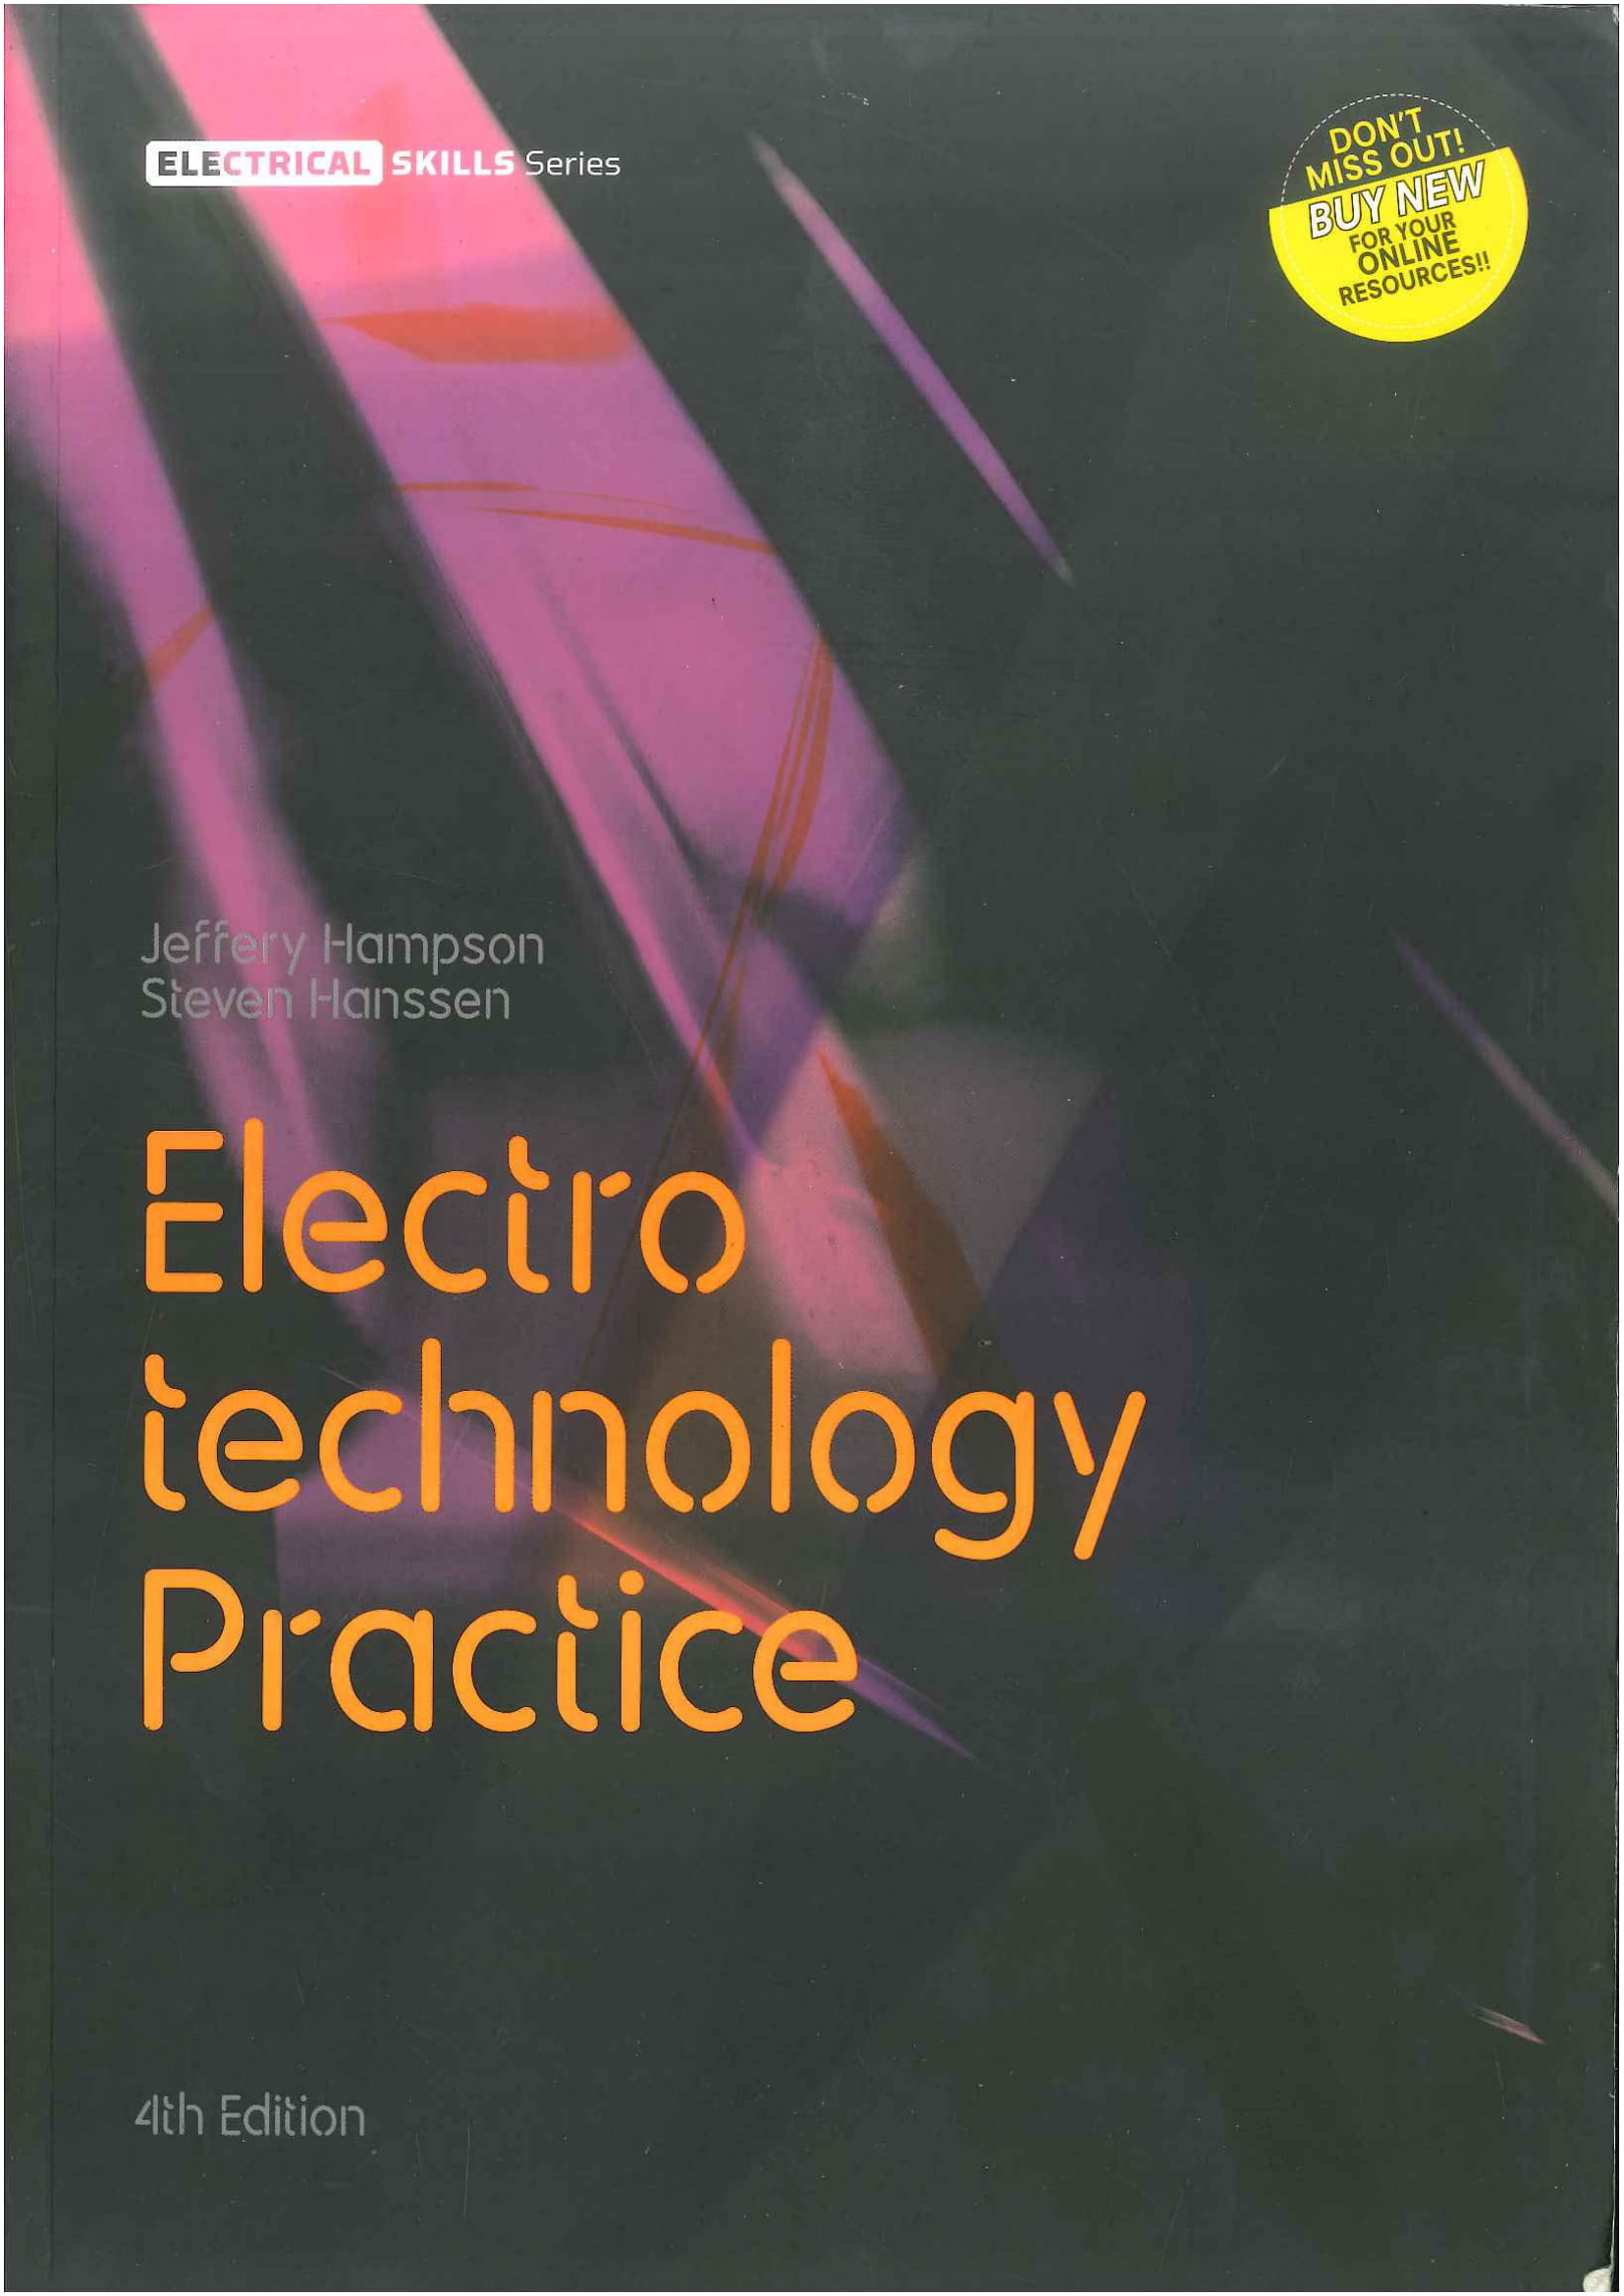 Electro technolody Practice